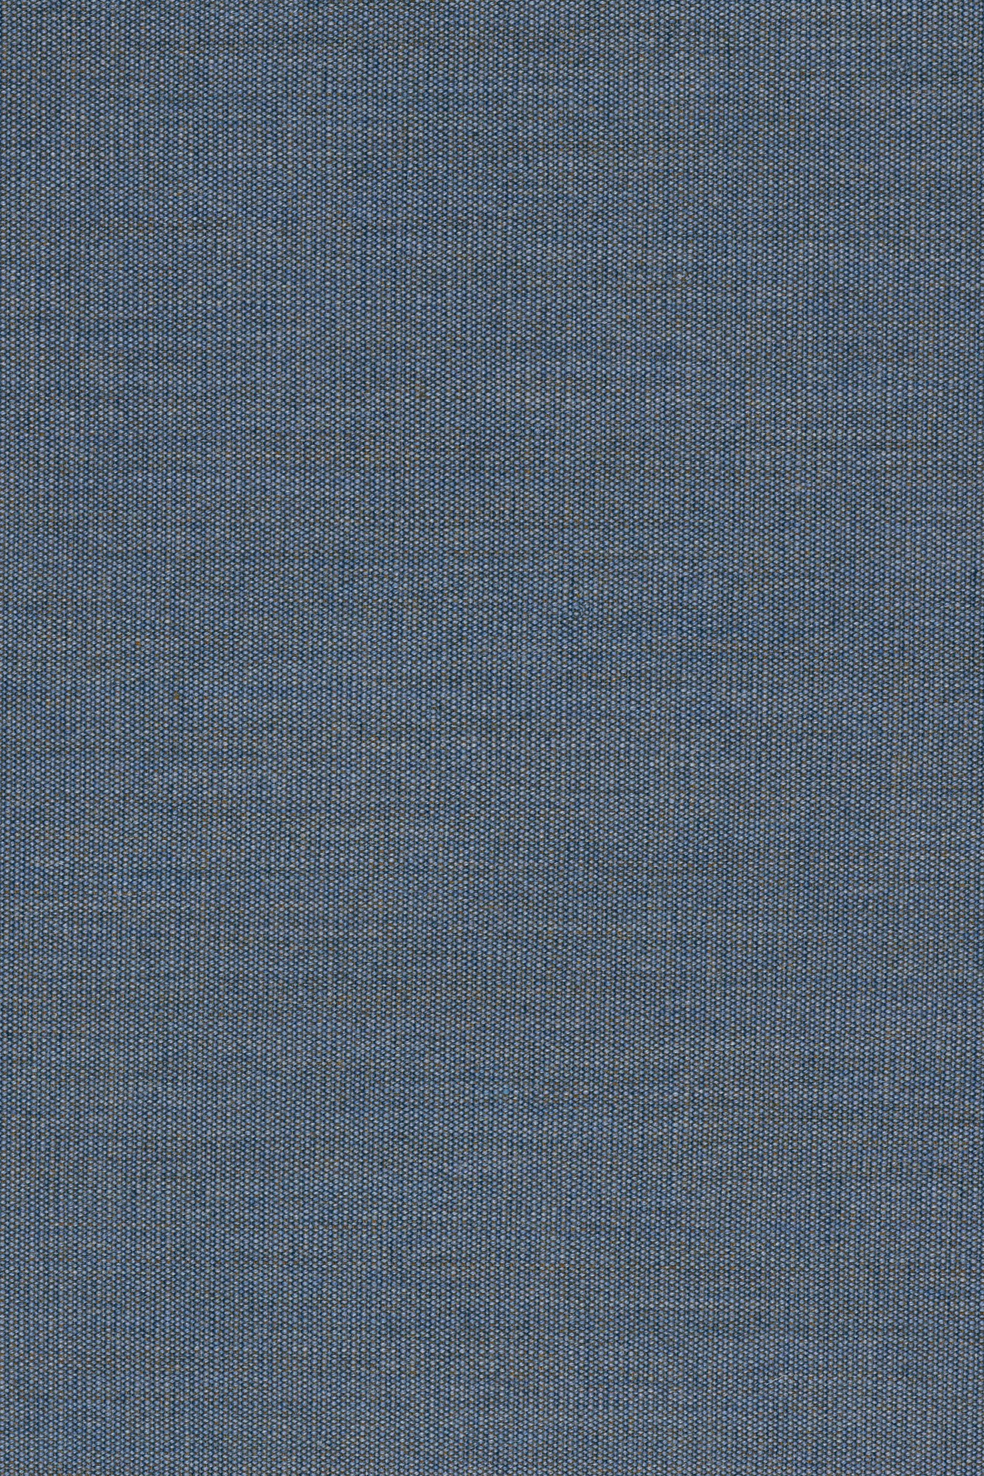 Fabric sample Canvas 2 734 blue